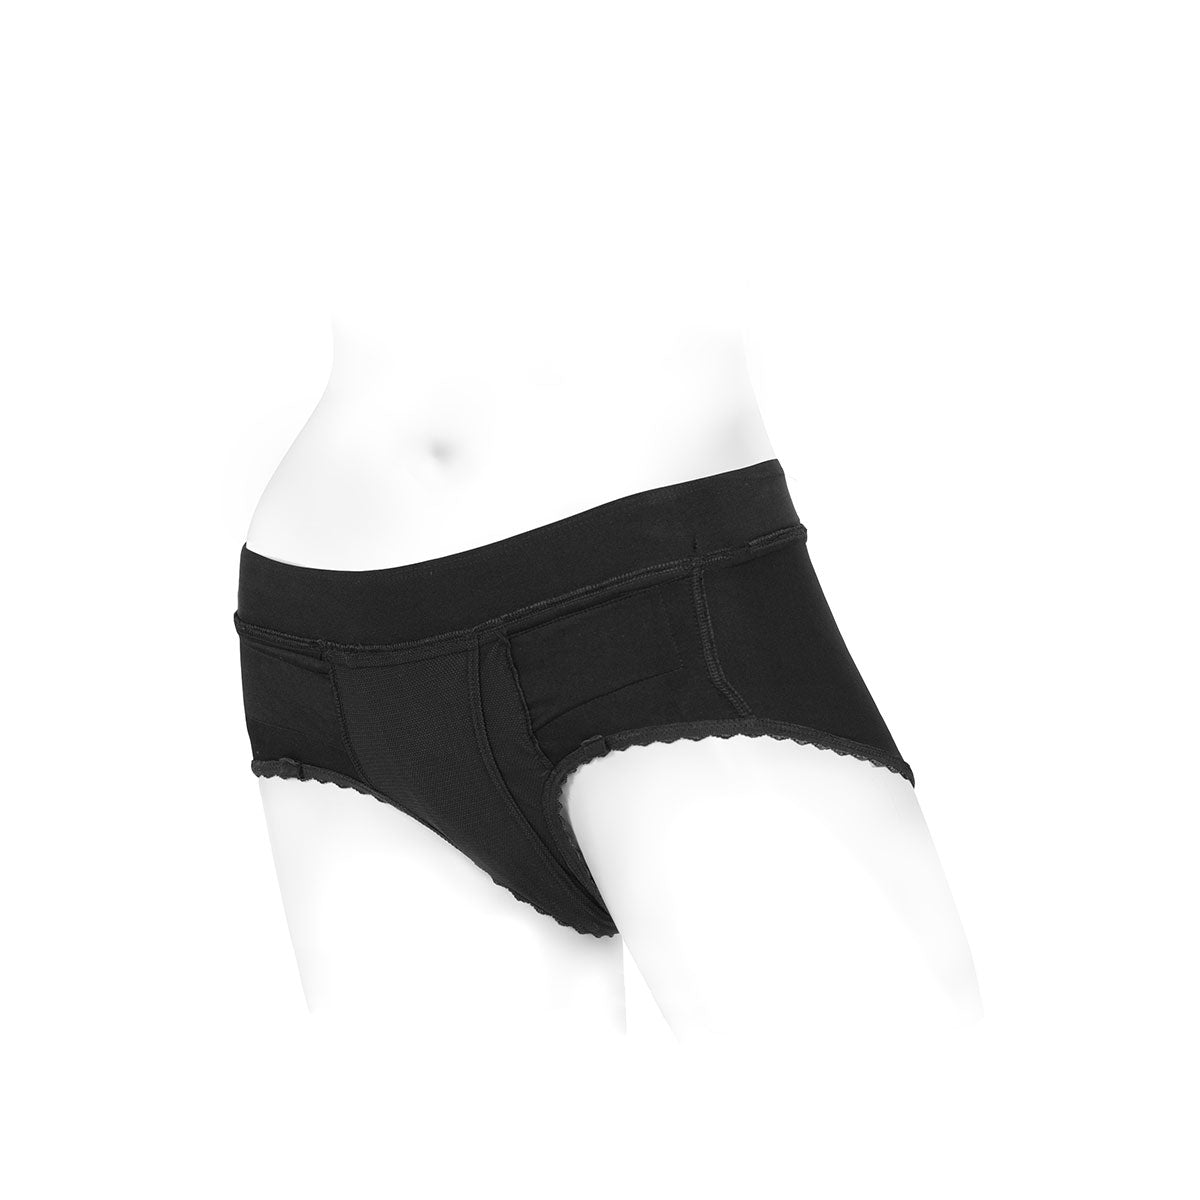 SpareParts Bella Harness Black-Black Nylon - Large Intimates Adult Boutique